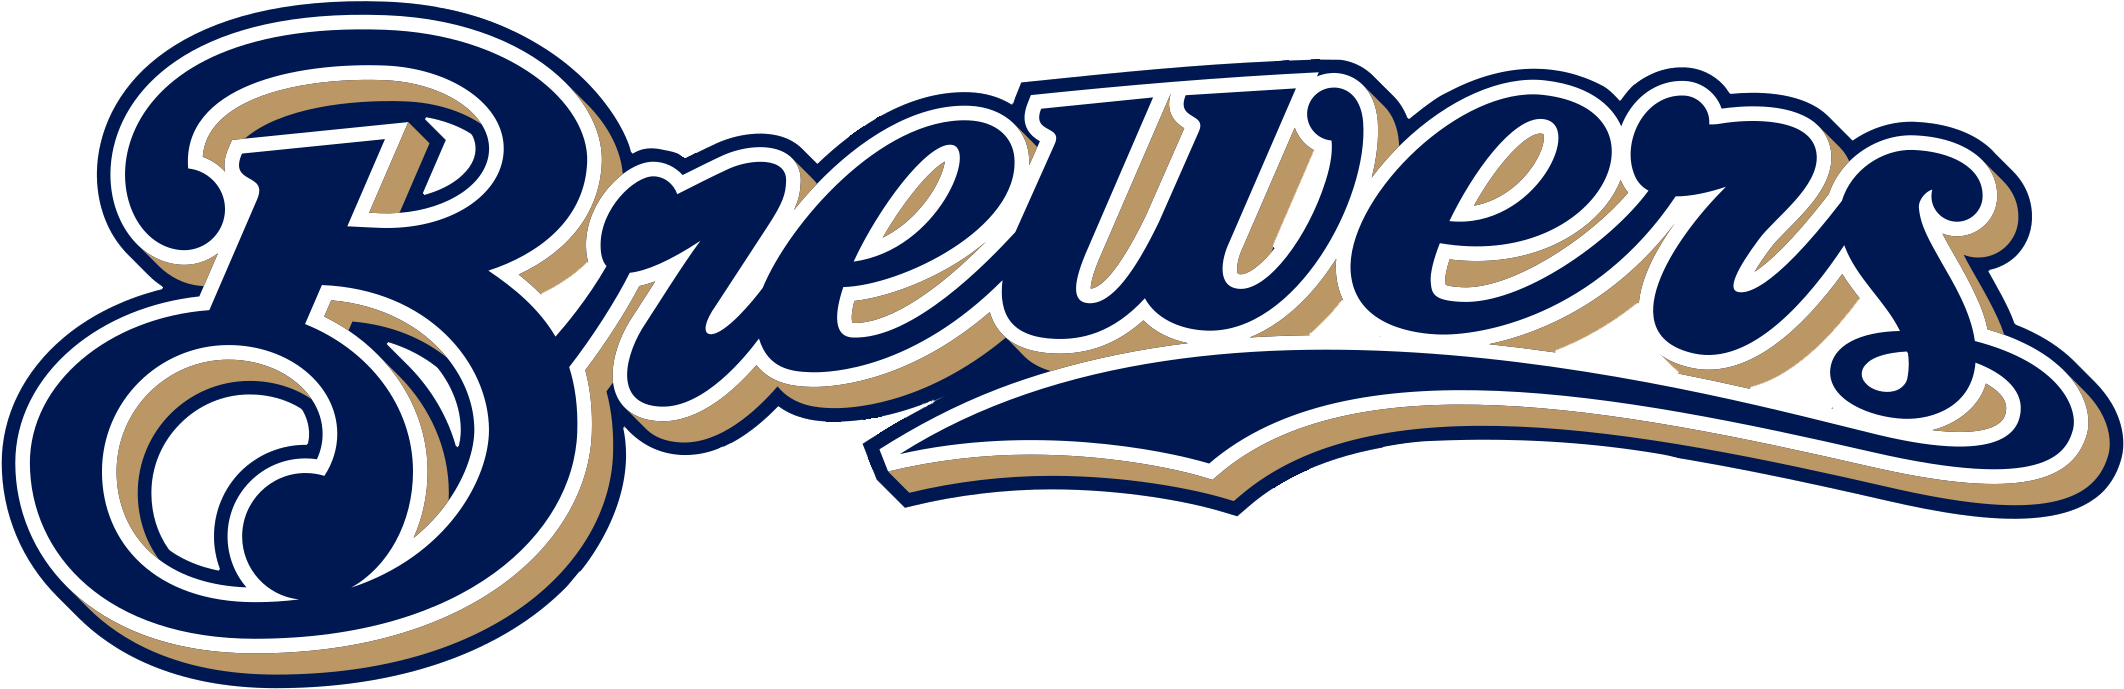 Milwaukee Brewers Logo 2018 (2400x1000)